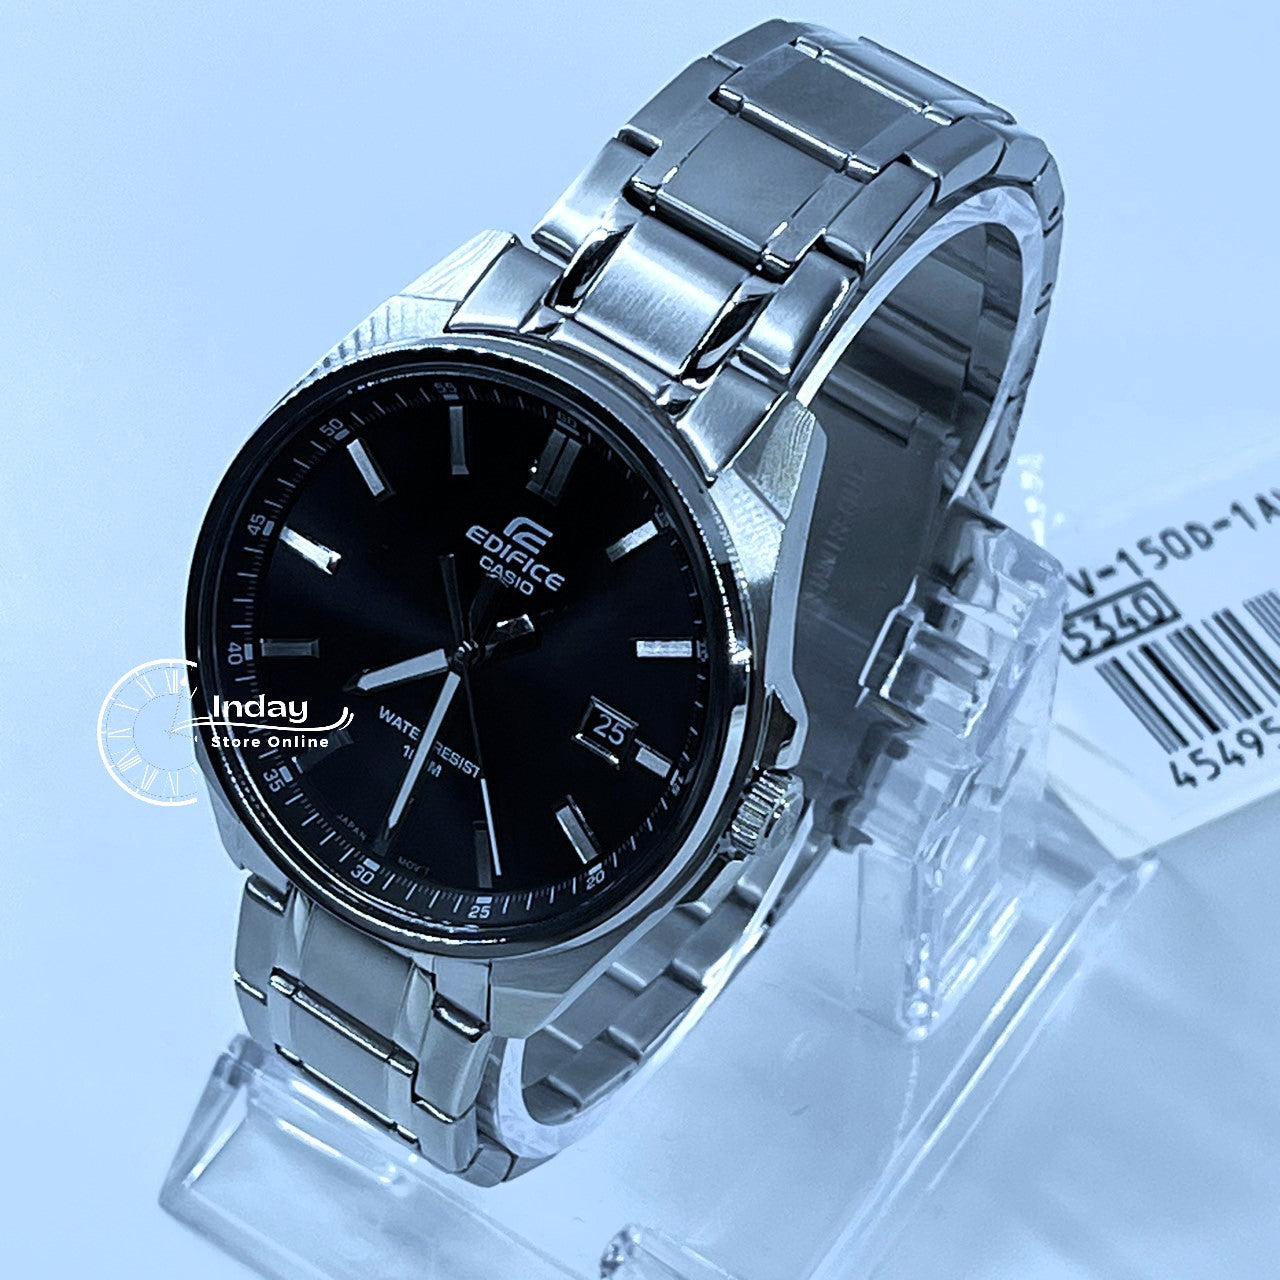 Casio Edifice Men's Watch EFV-150D-1A